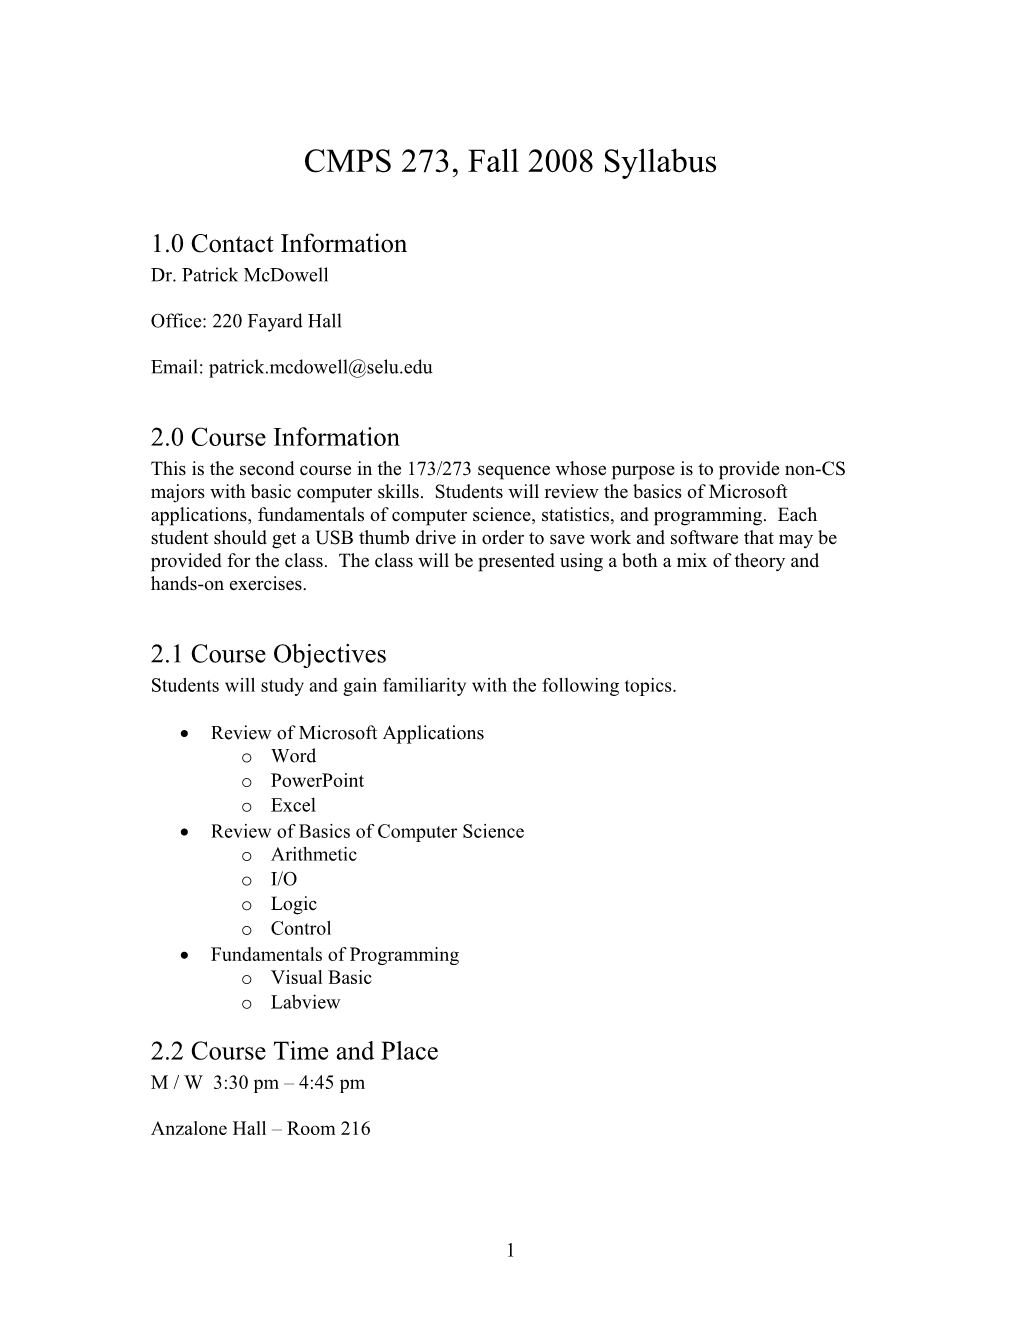 CMPS 273, Fall 2006 Syllabus